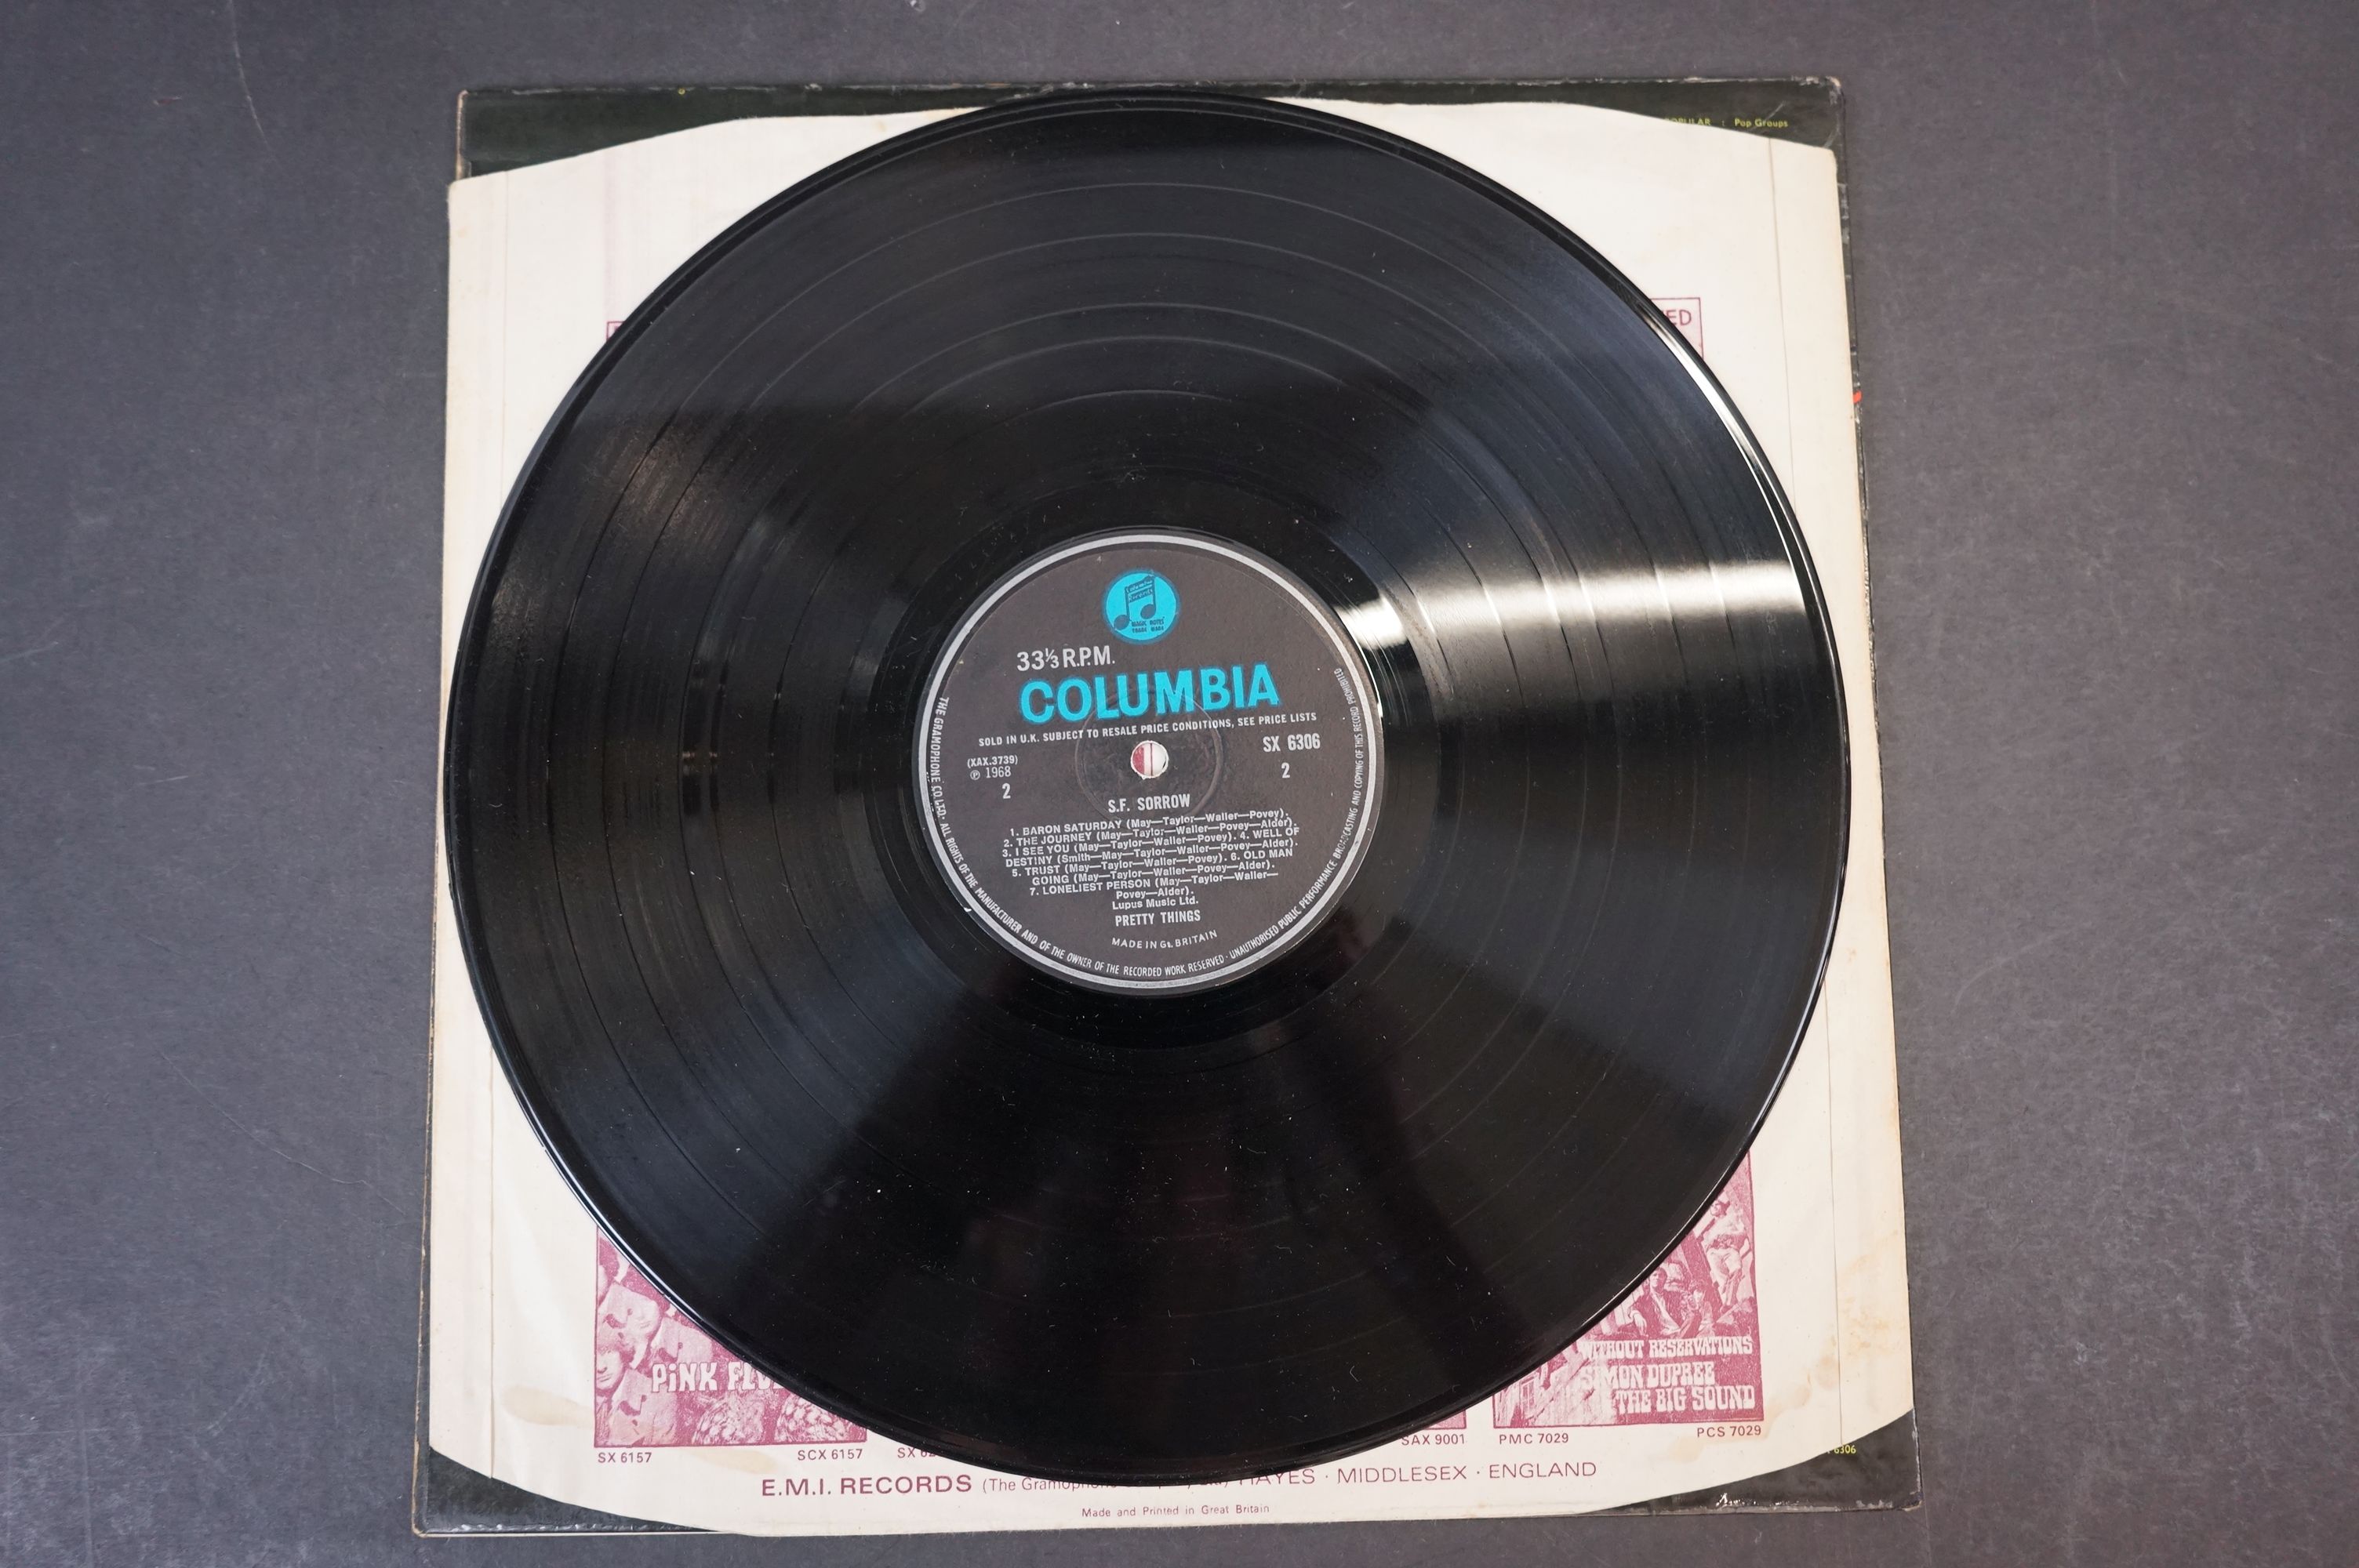 Vinyl - Pretty Things - S. F. Sorrow. Original Uk 1st Pressing mono copy SX 6306 gatefold sleeve - Image 4 of 5